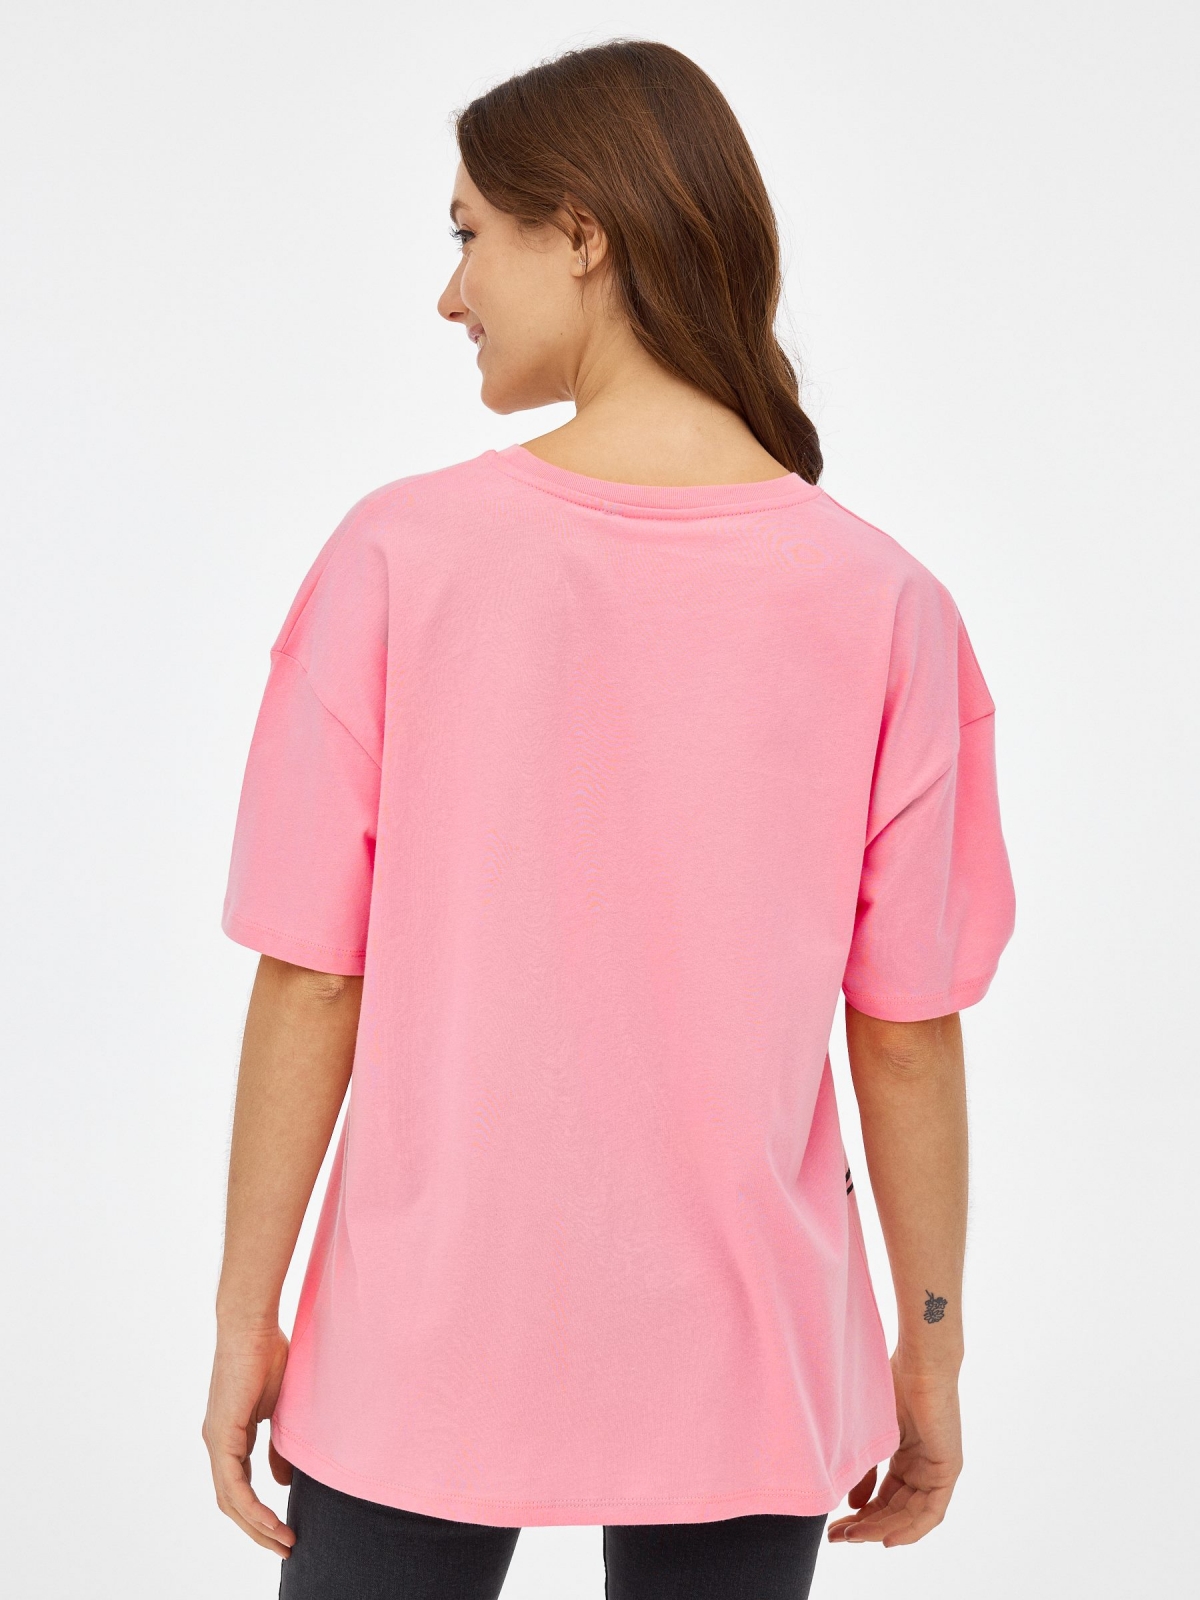 T-shirt oversized Tom & Jerry rosa claro vista meia traseira